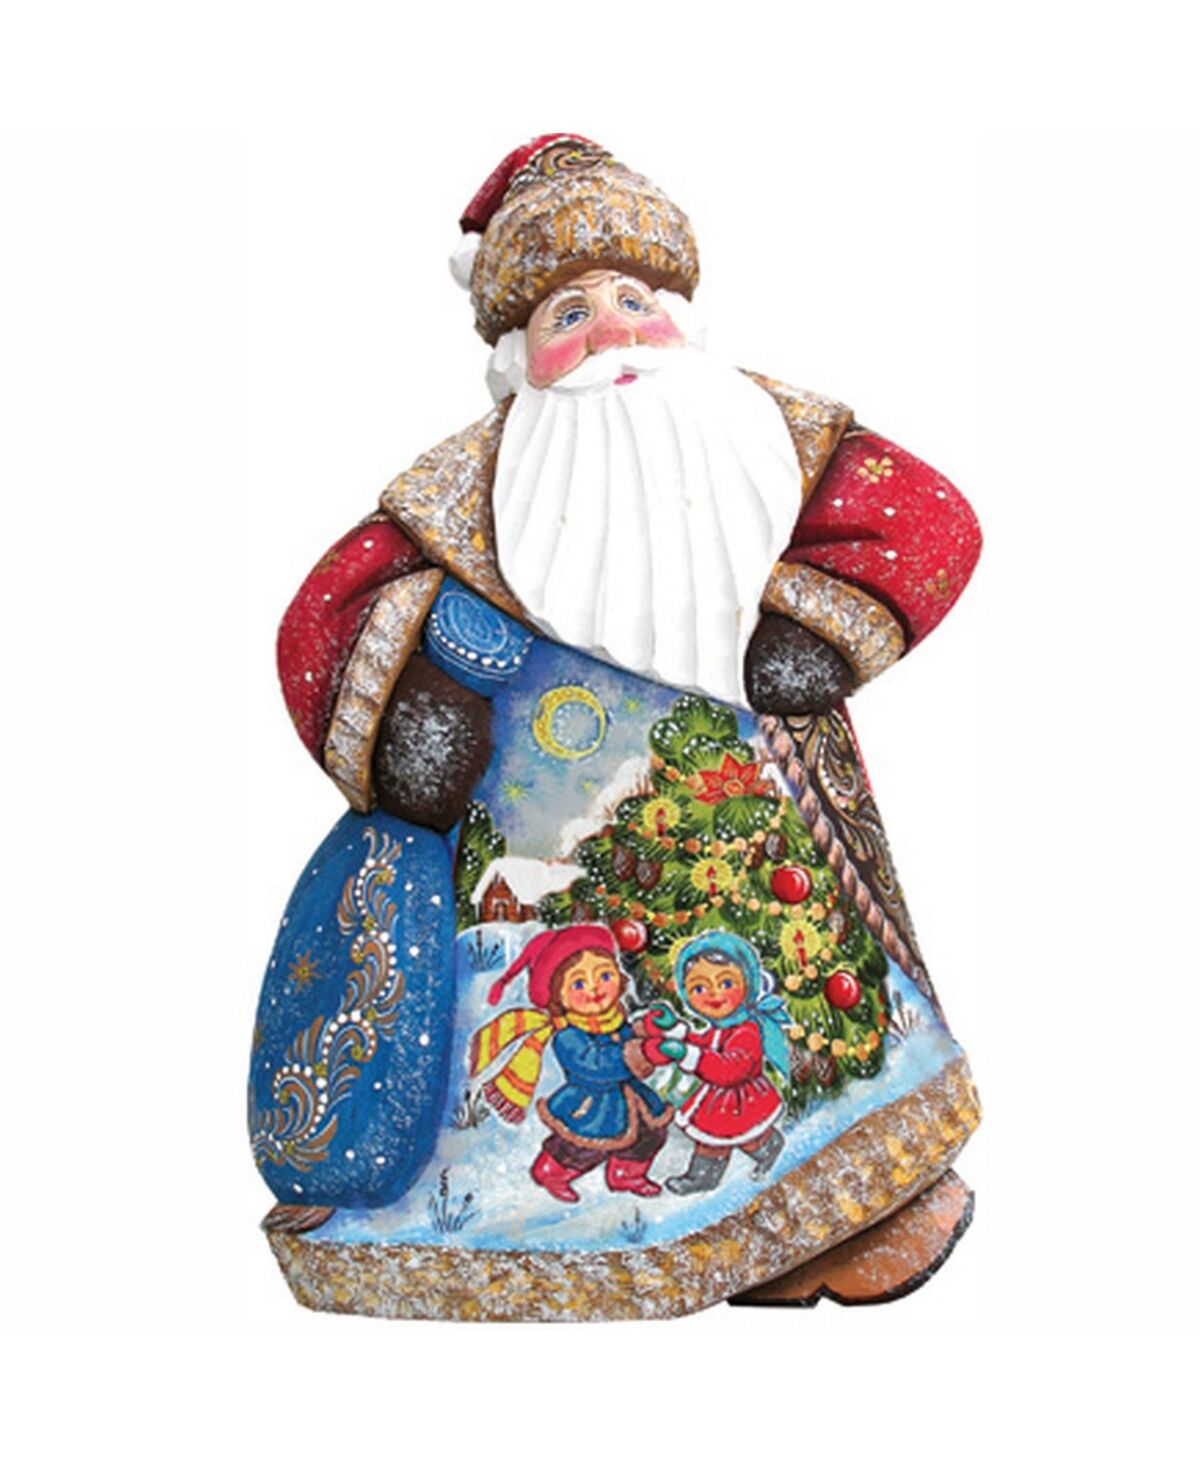 G.DeBrekht Woodcarved and Hand Painted Trim A Tree Dancing Santa Figurine - Multi